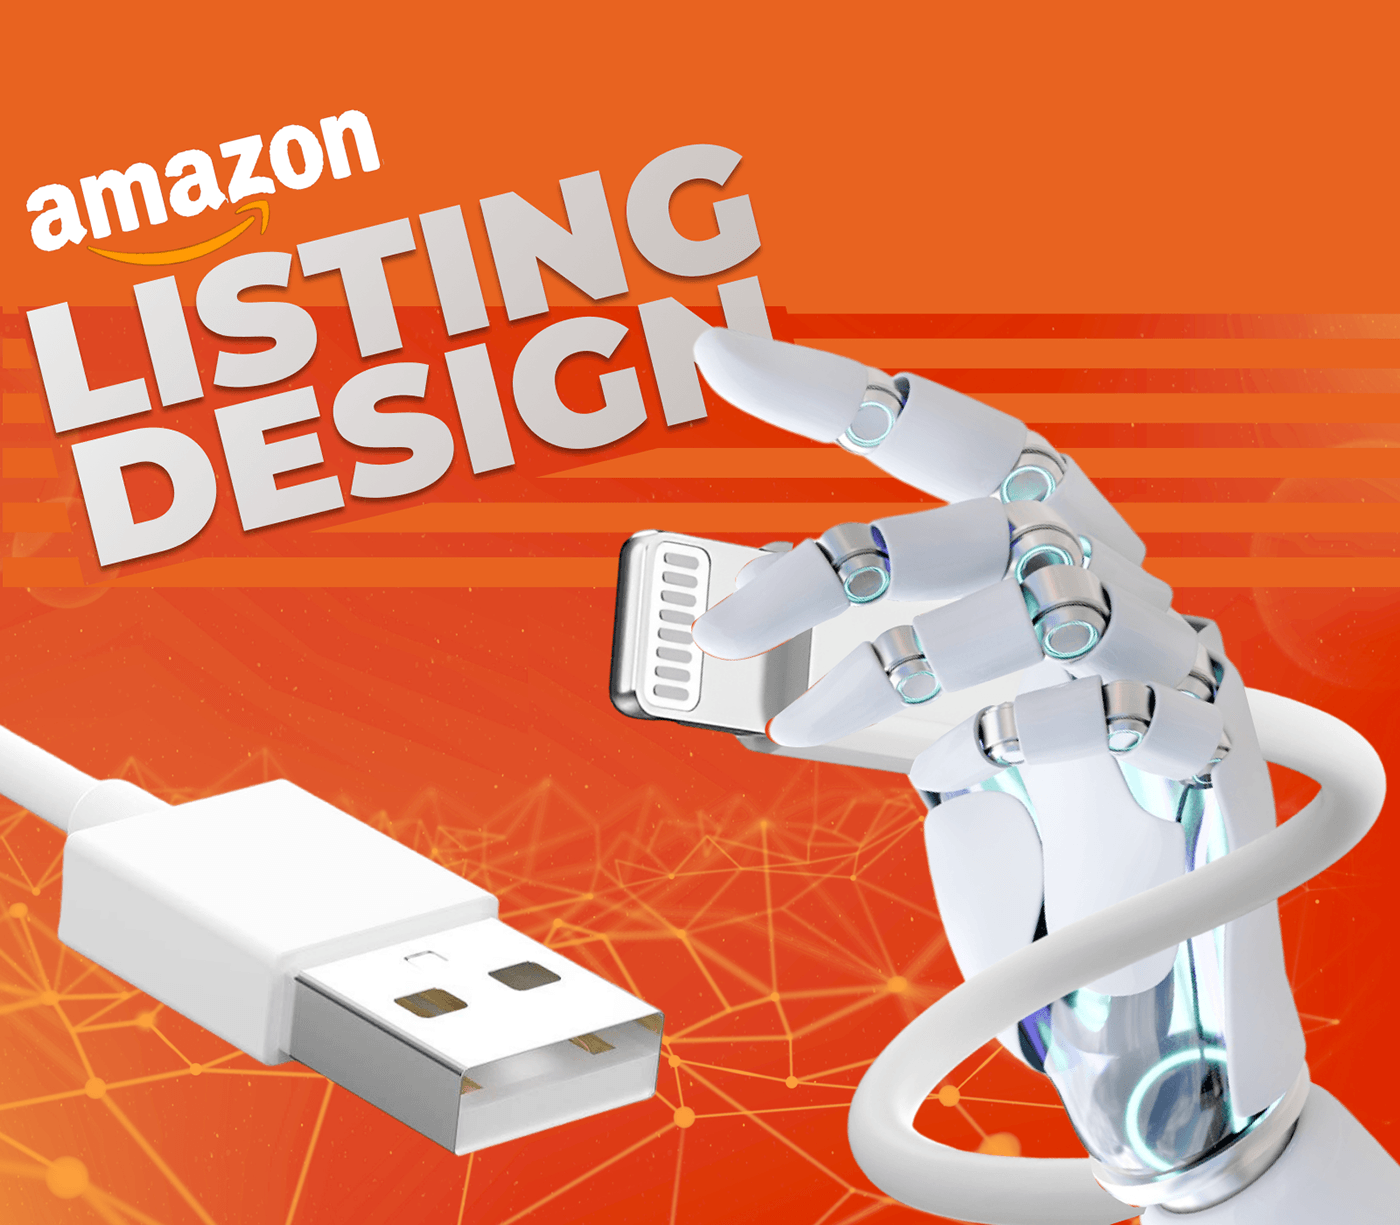 Amazon listing infographic A+ Content Listing Images amazon ebc enhanced brand content EBC Design Amazon Product listing design